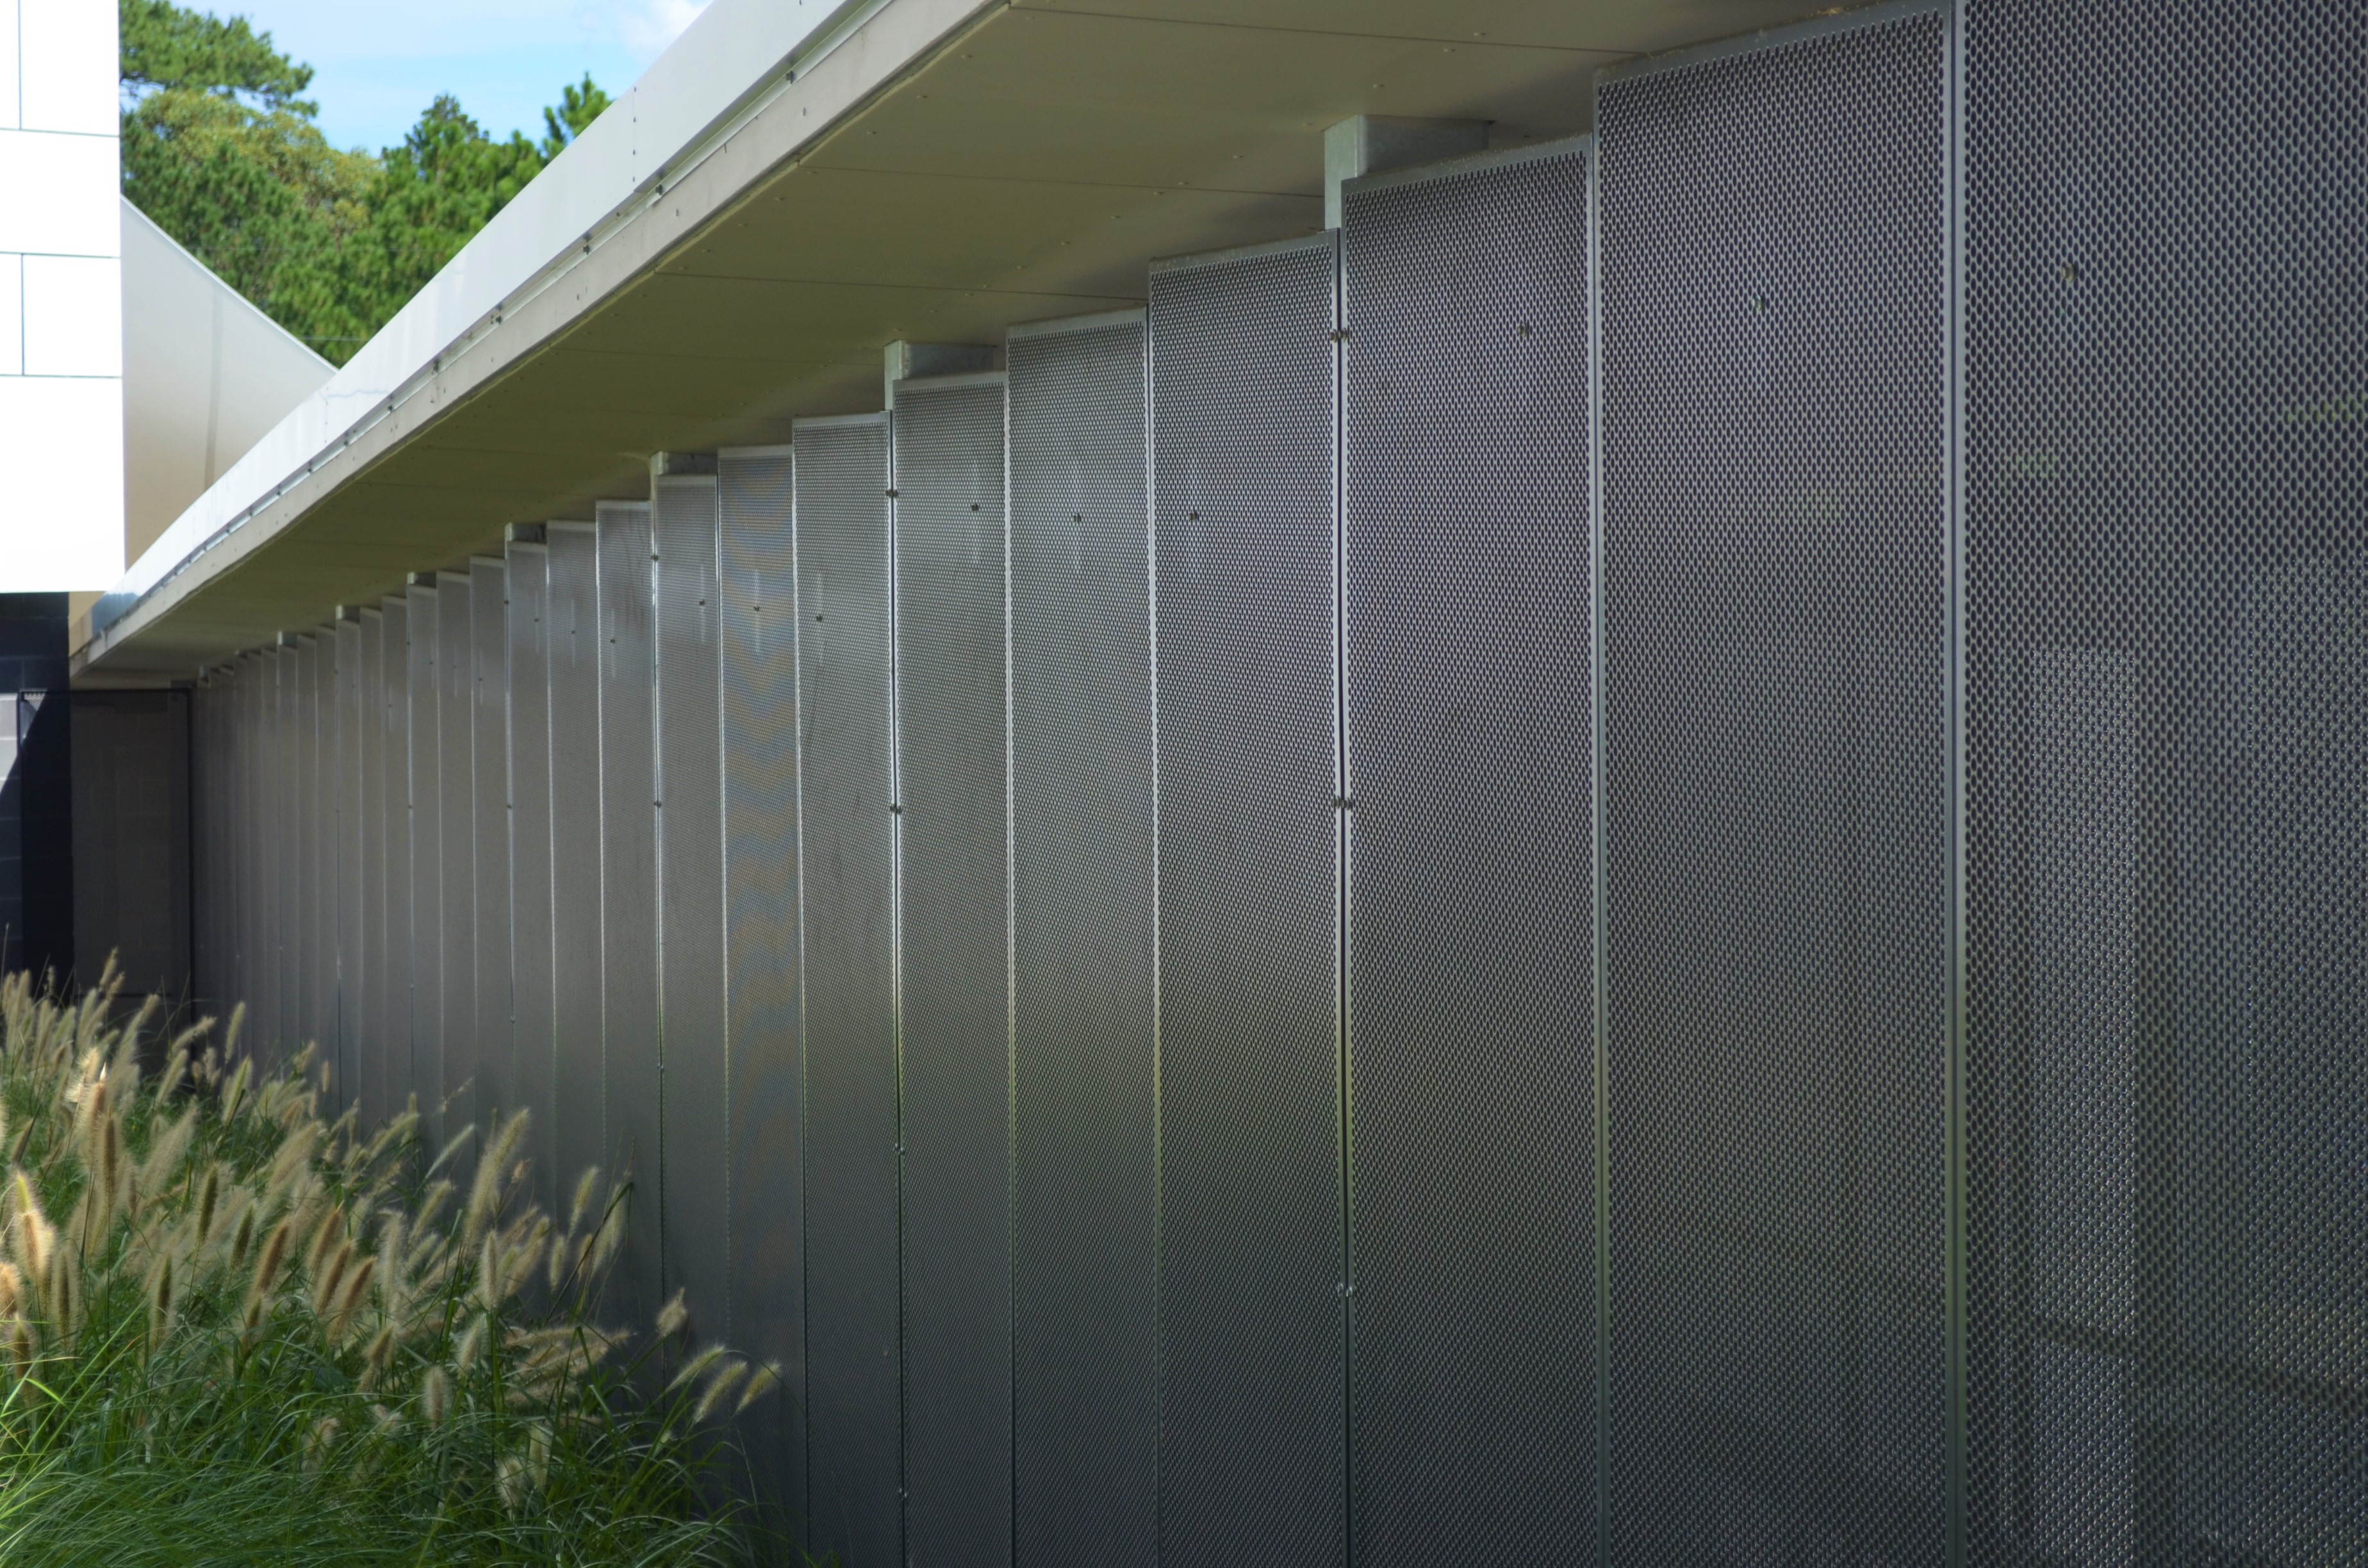 Perforated metal walkway panels - gosford hospital